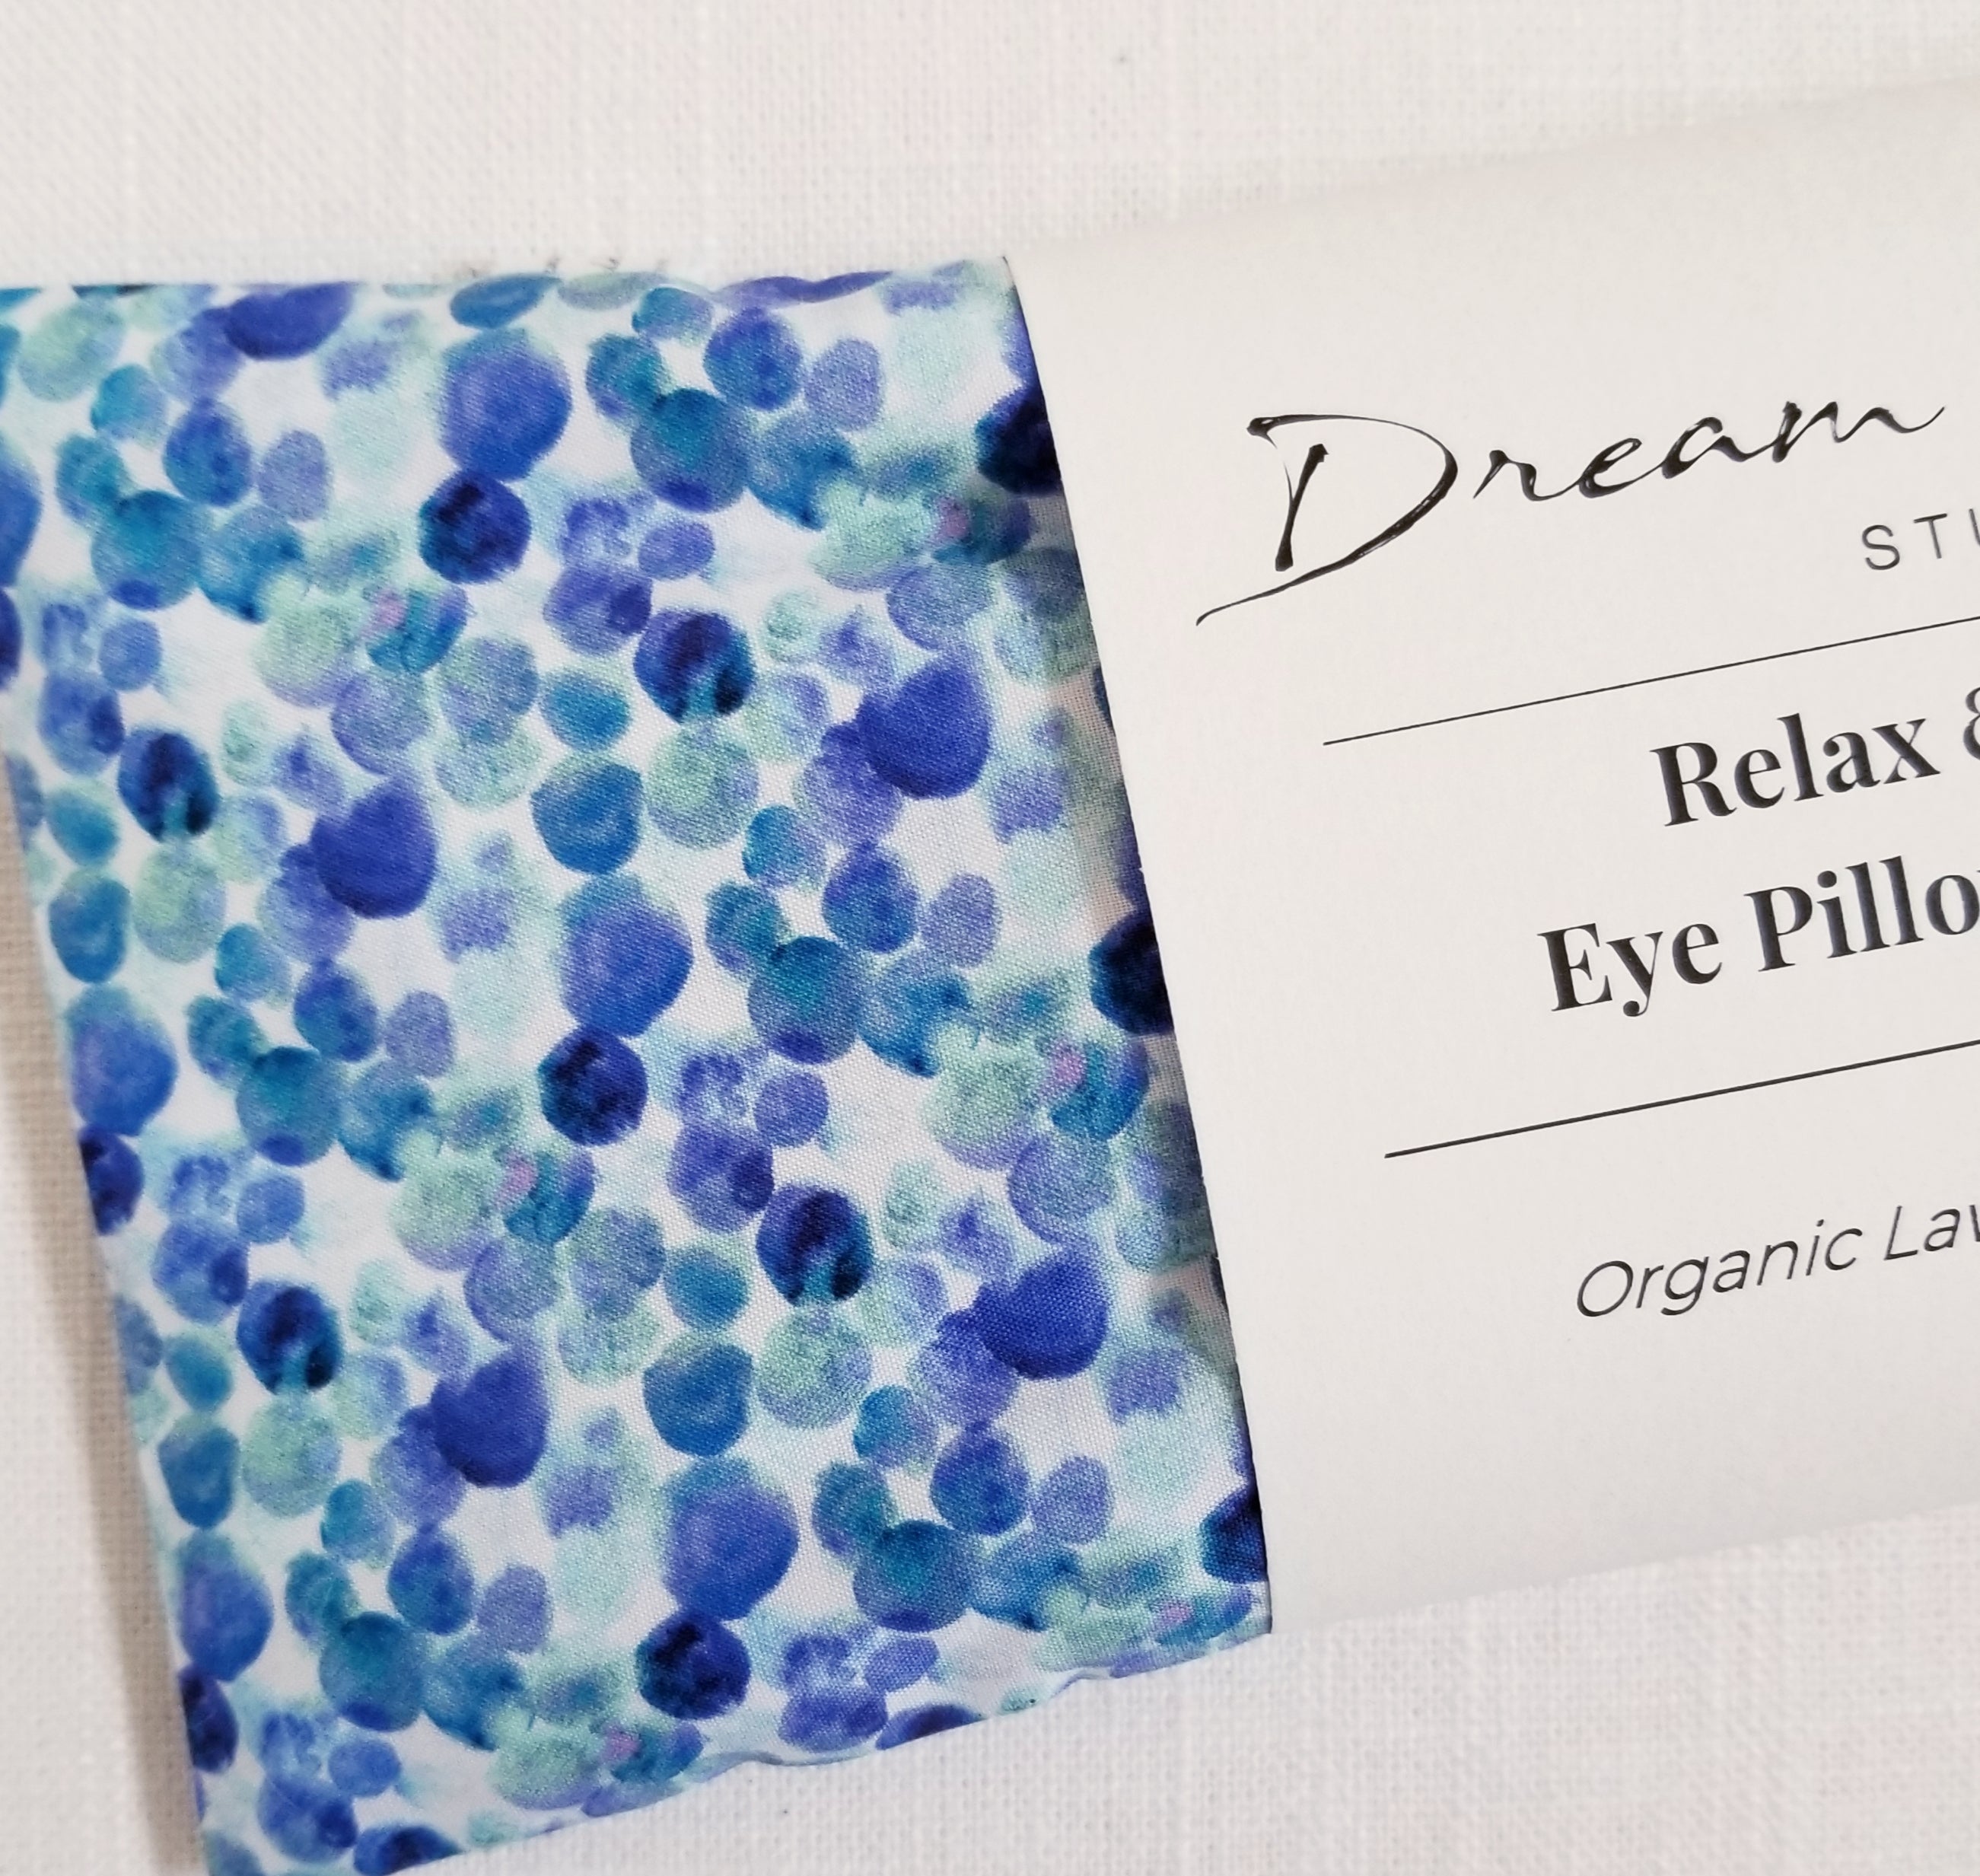 Lavender Eye Pillow Gift Box with Bath Soak, Pillow Spray & Tea